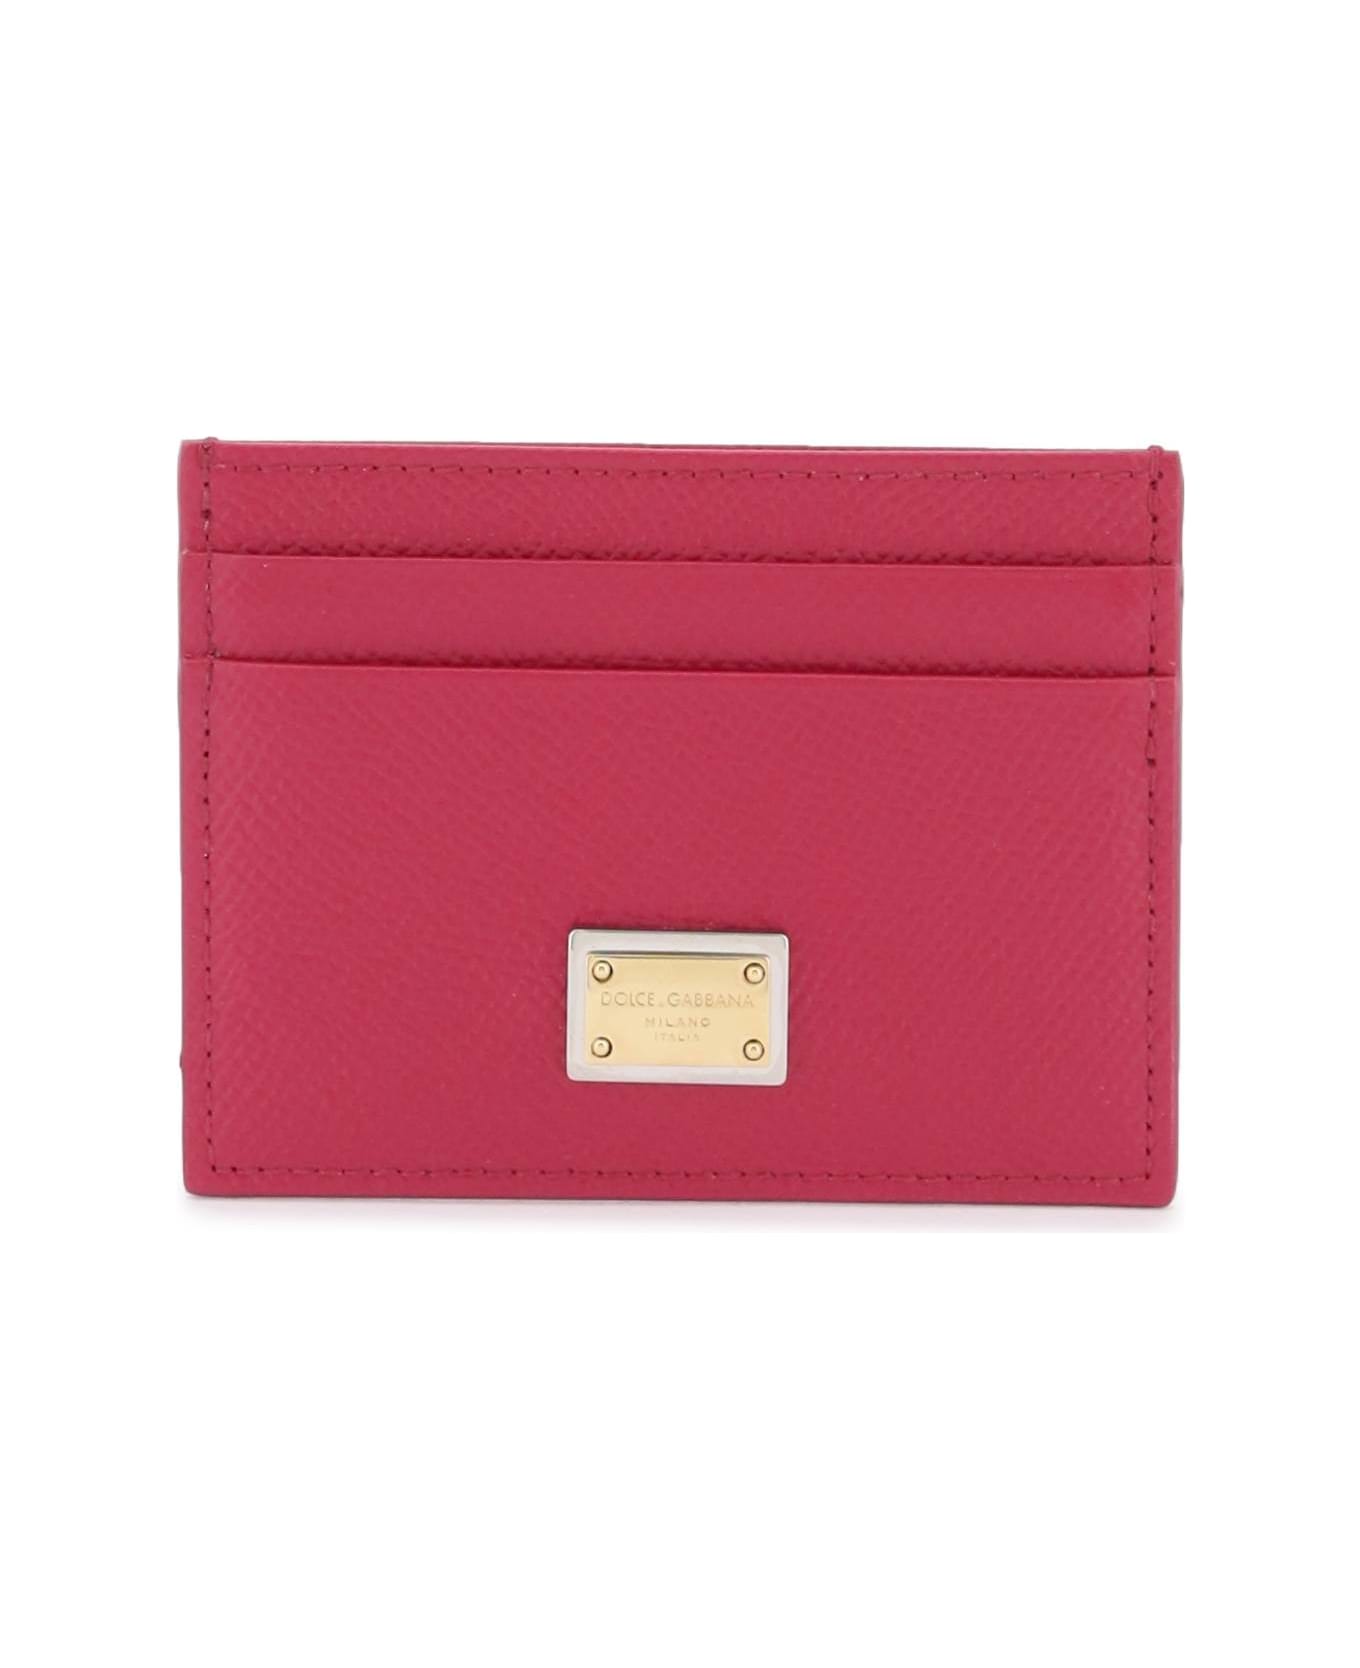 Dolce & Gabbana Dauphine Leather Card Holder - Pink